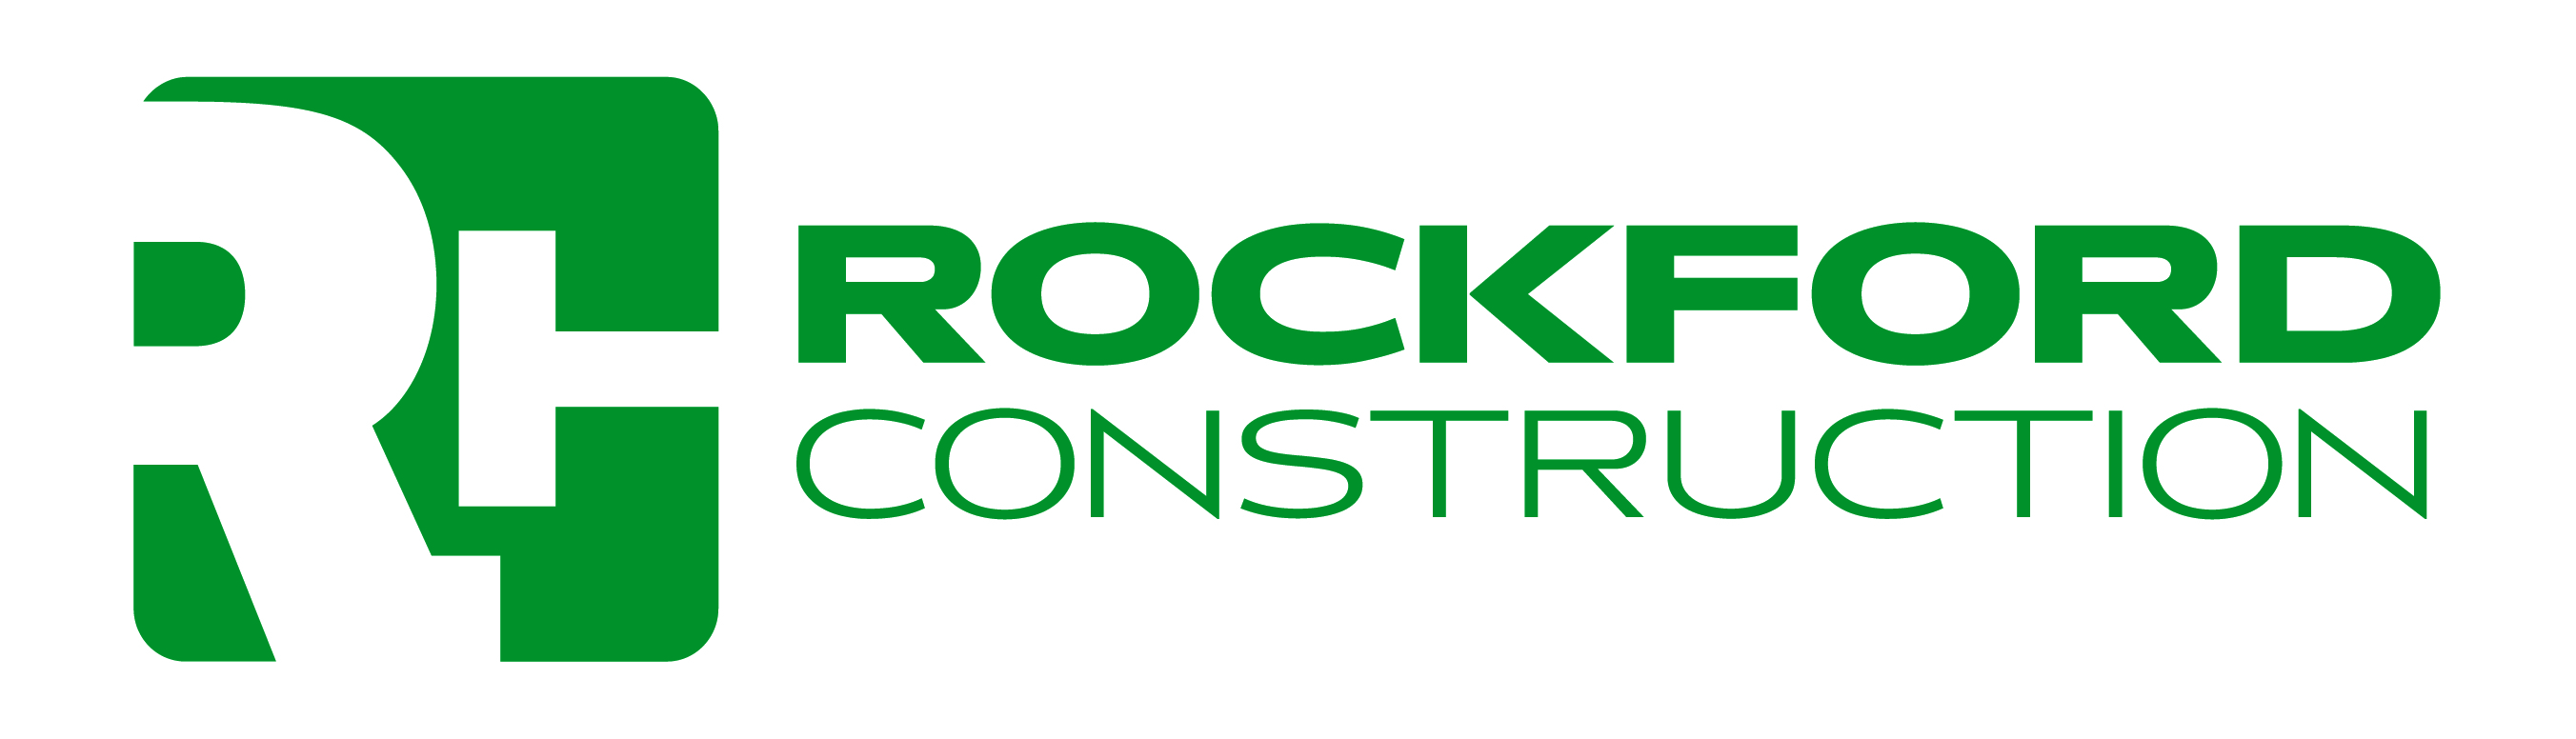 Rockford Construction Co., Inc.